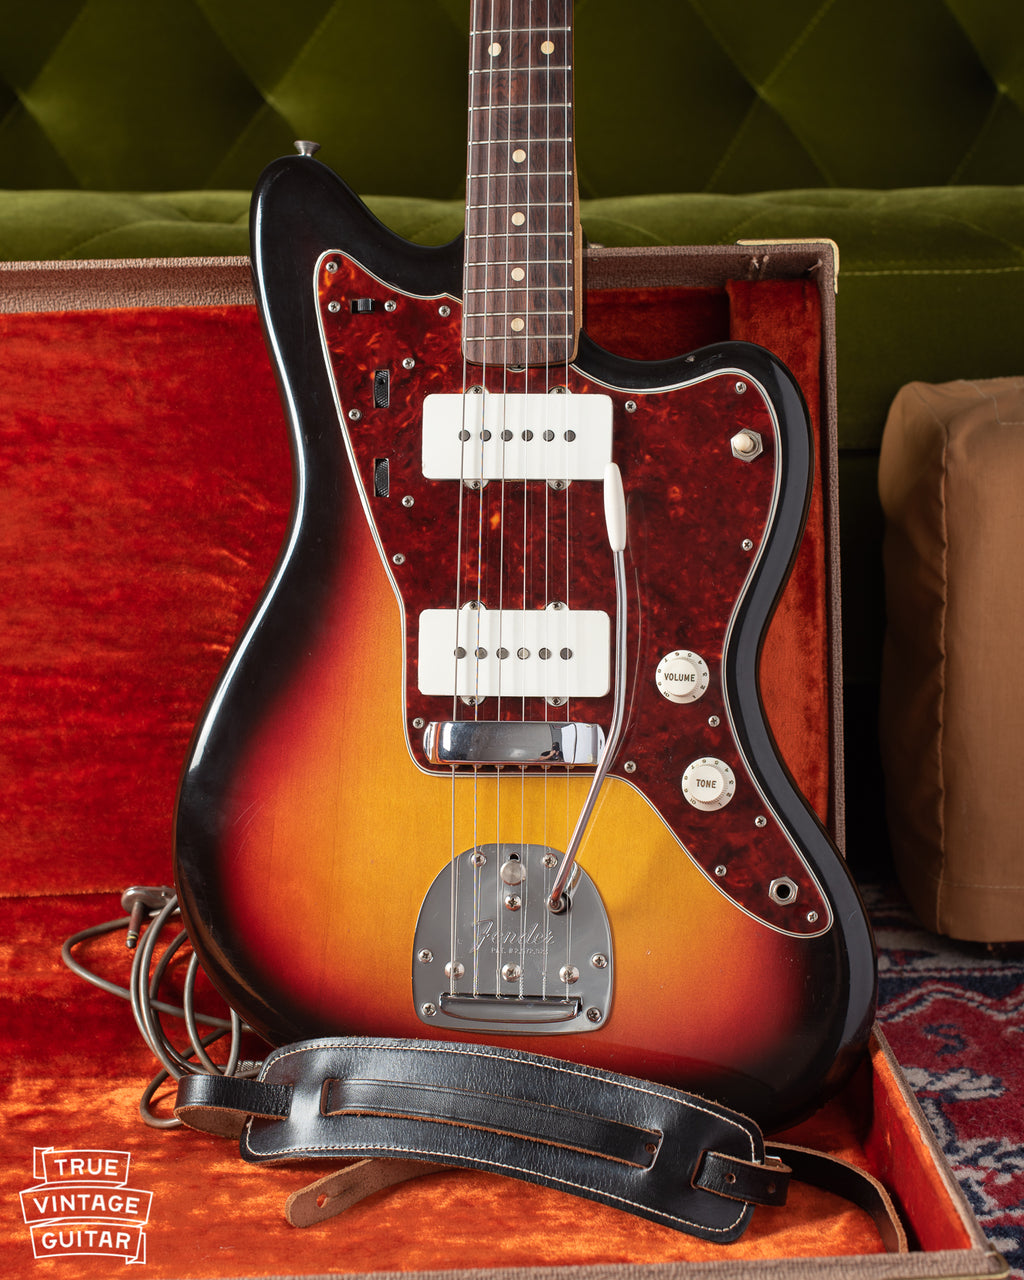 Fender Jazzmaster 1963 vintage original guitar